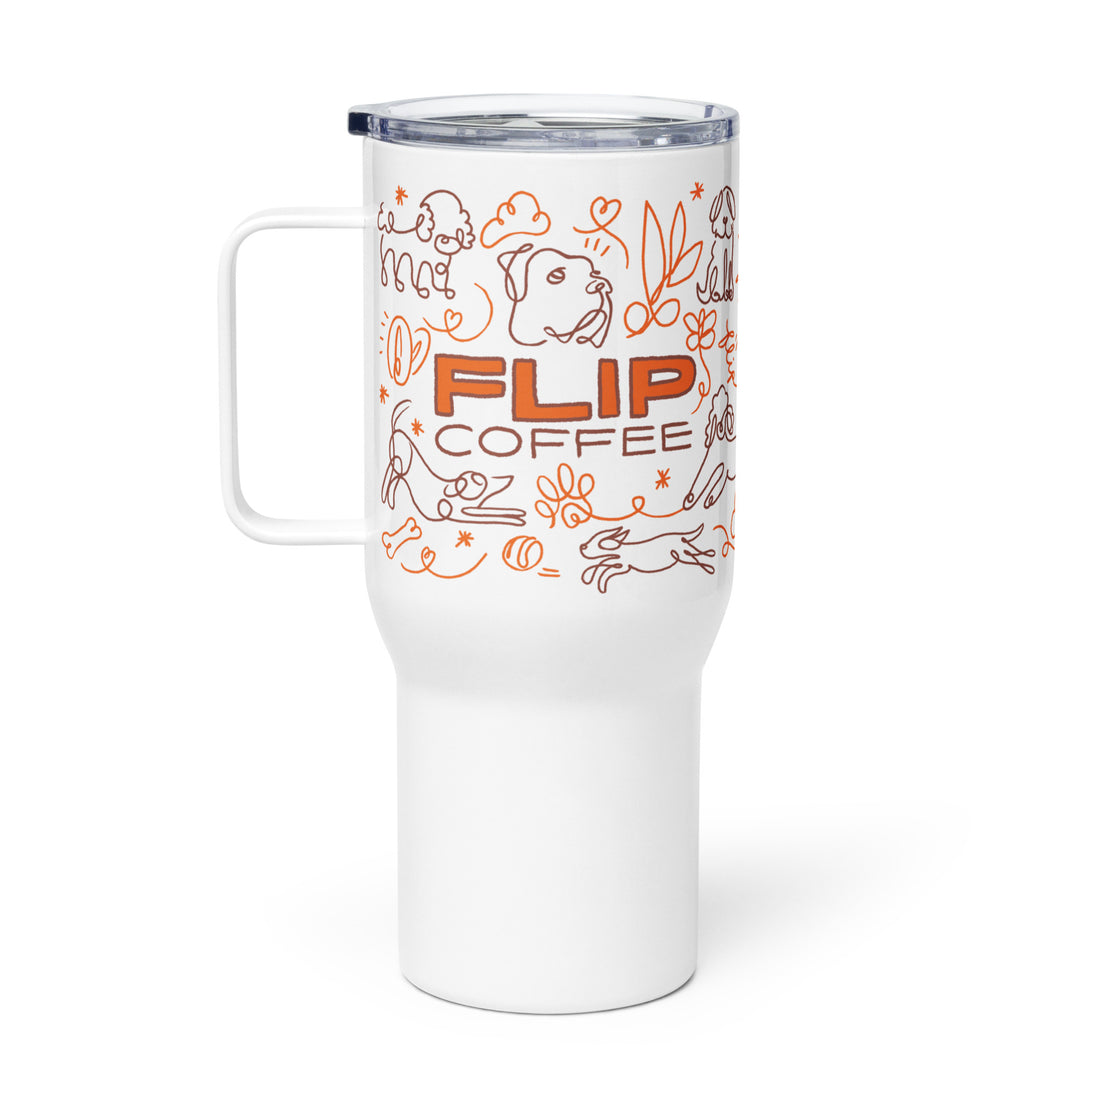 DOGS &amp; COFFEE: Travel mug with a handle